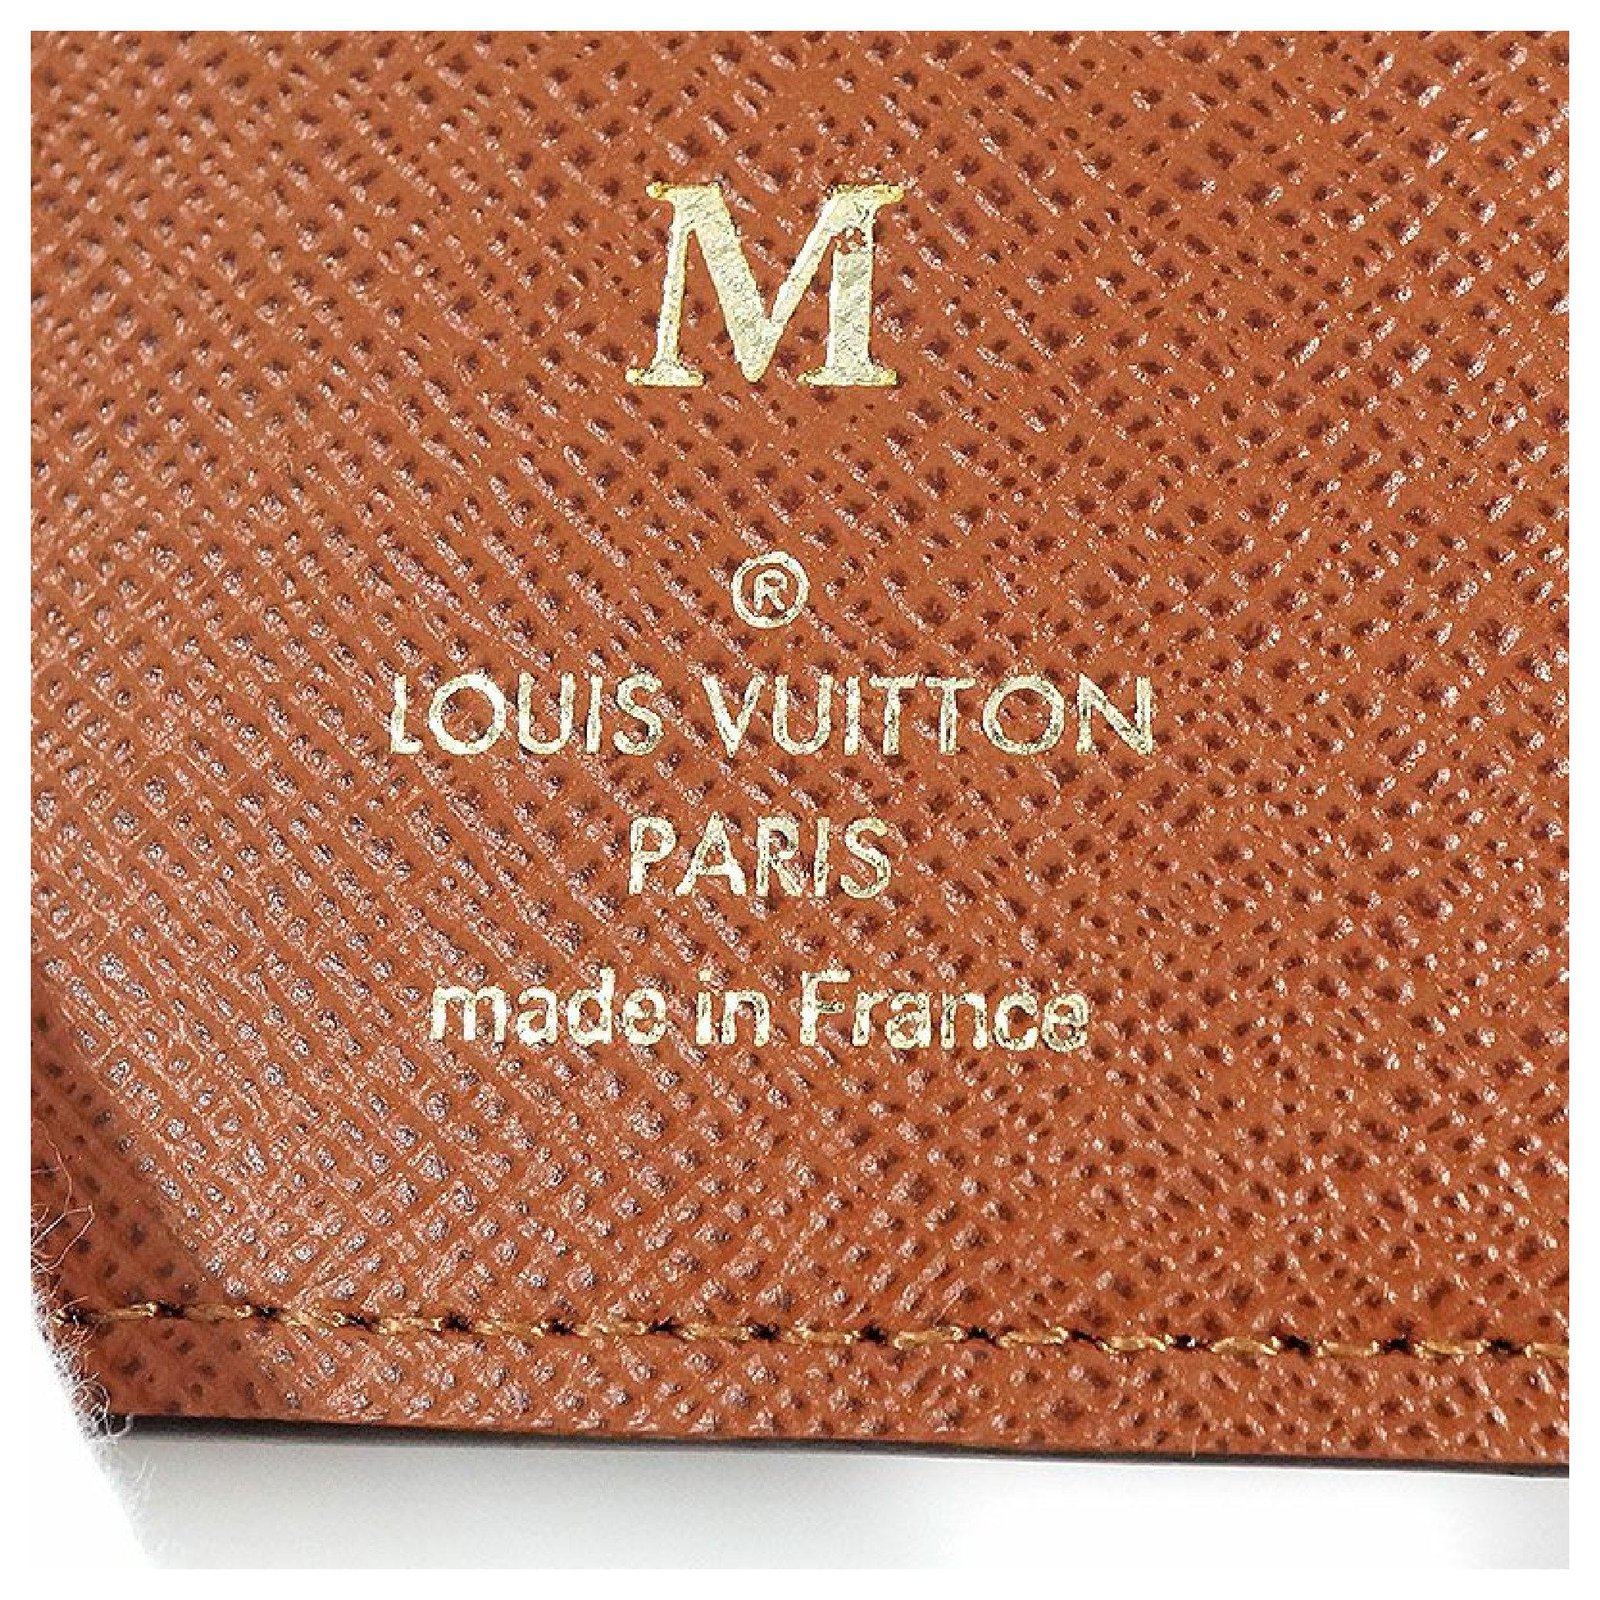 Portafoglio Louis Vuitton originale in 20096 Pioltello for €280.00